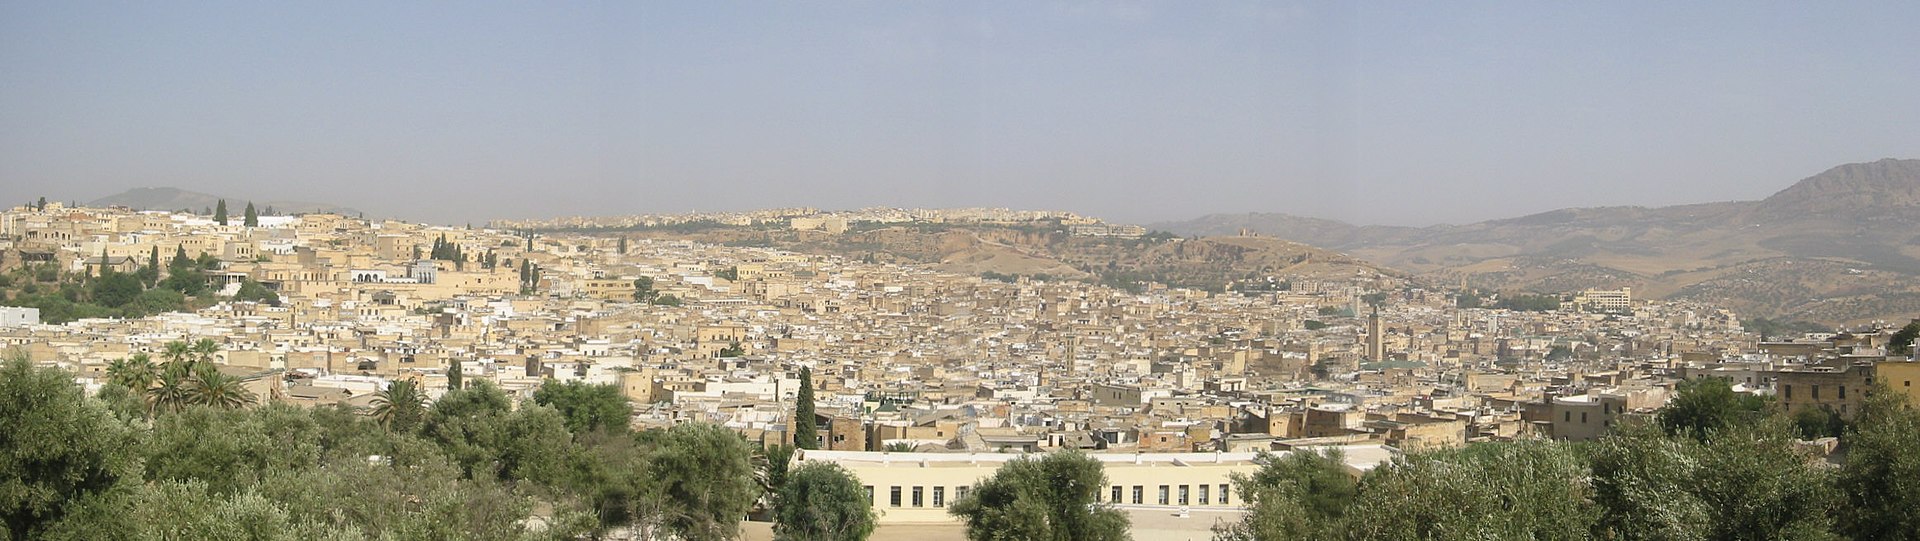 1920px-Fes_Medina_Panoramic_view.jpg